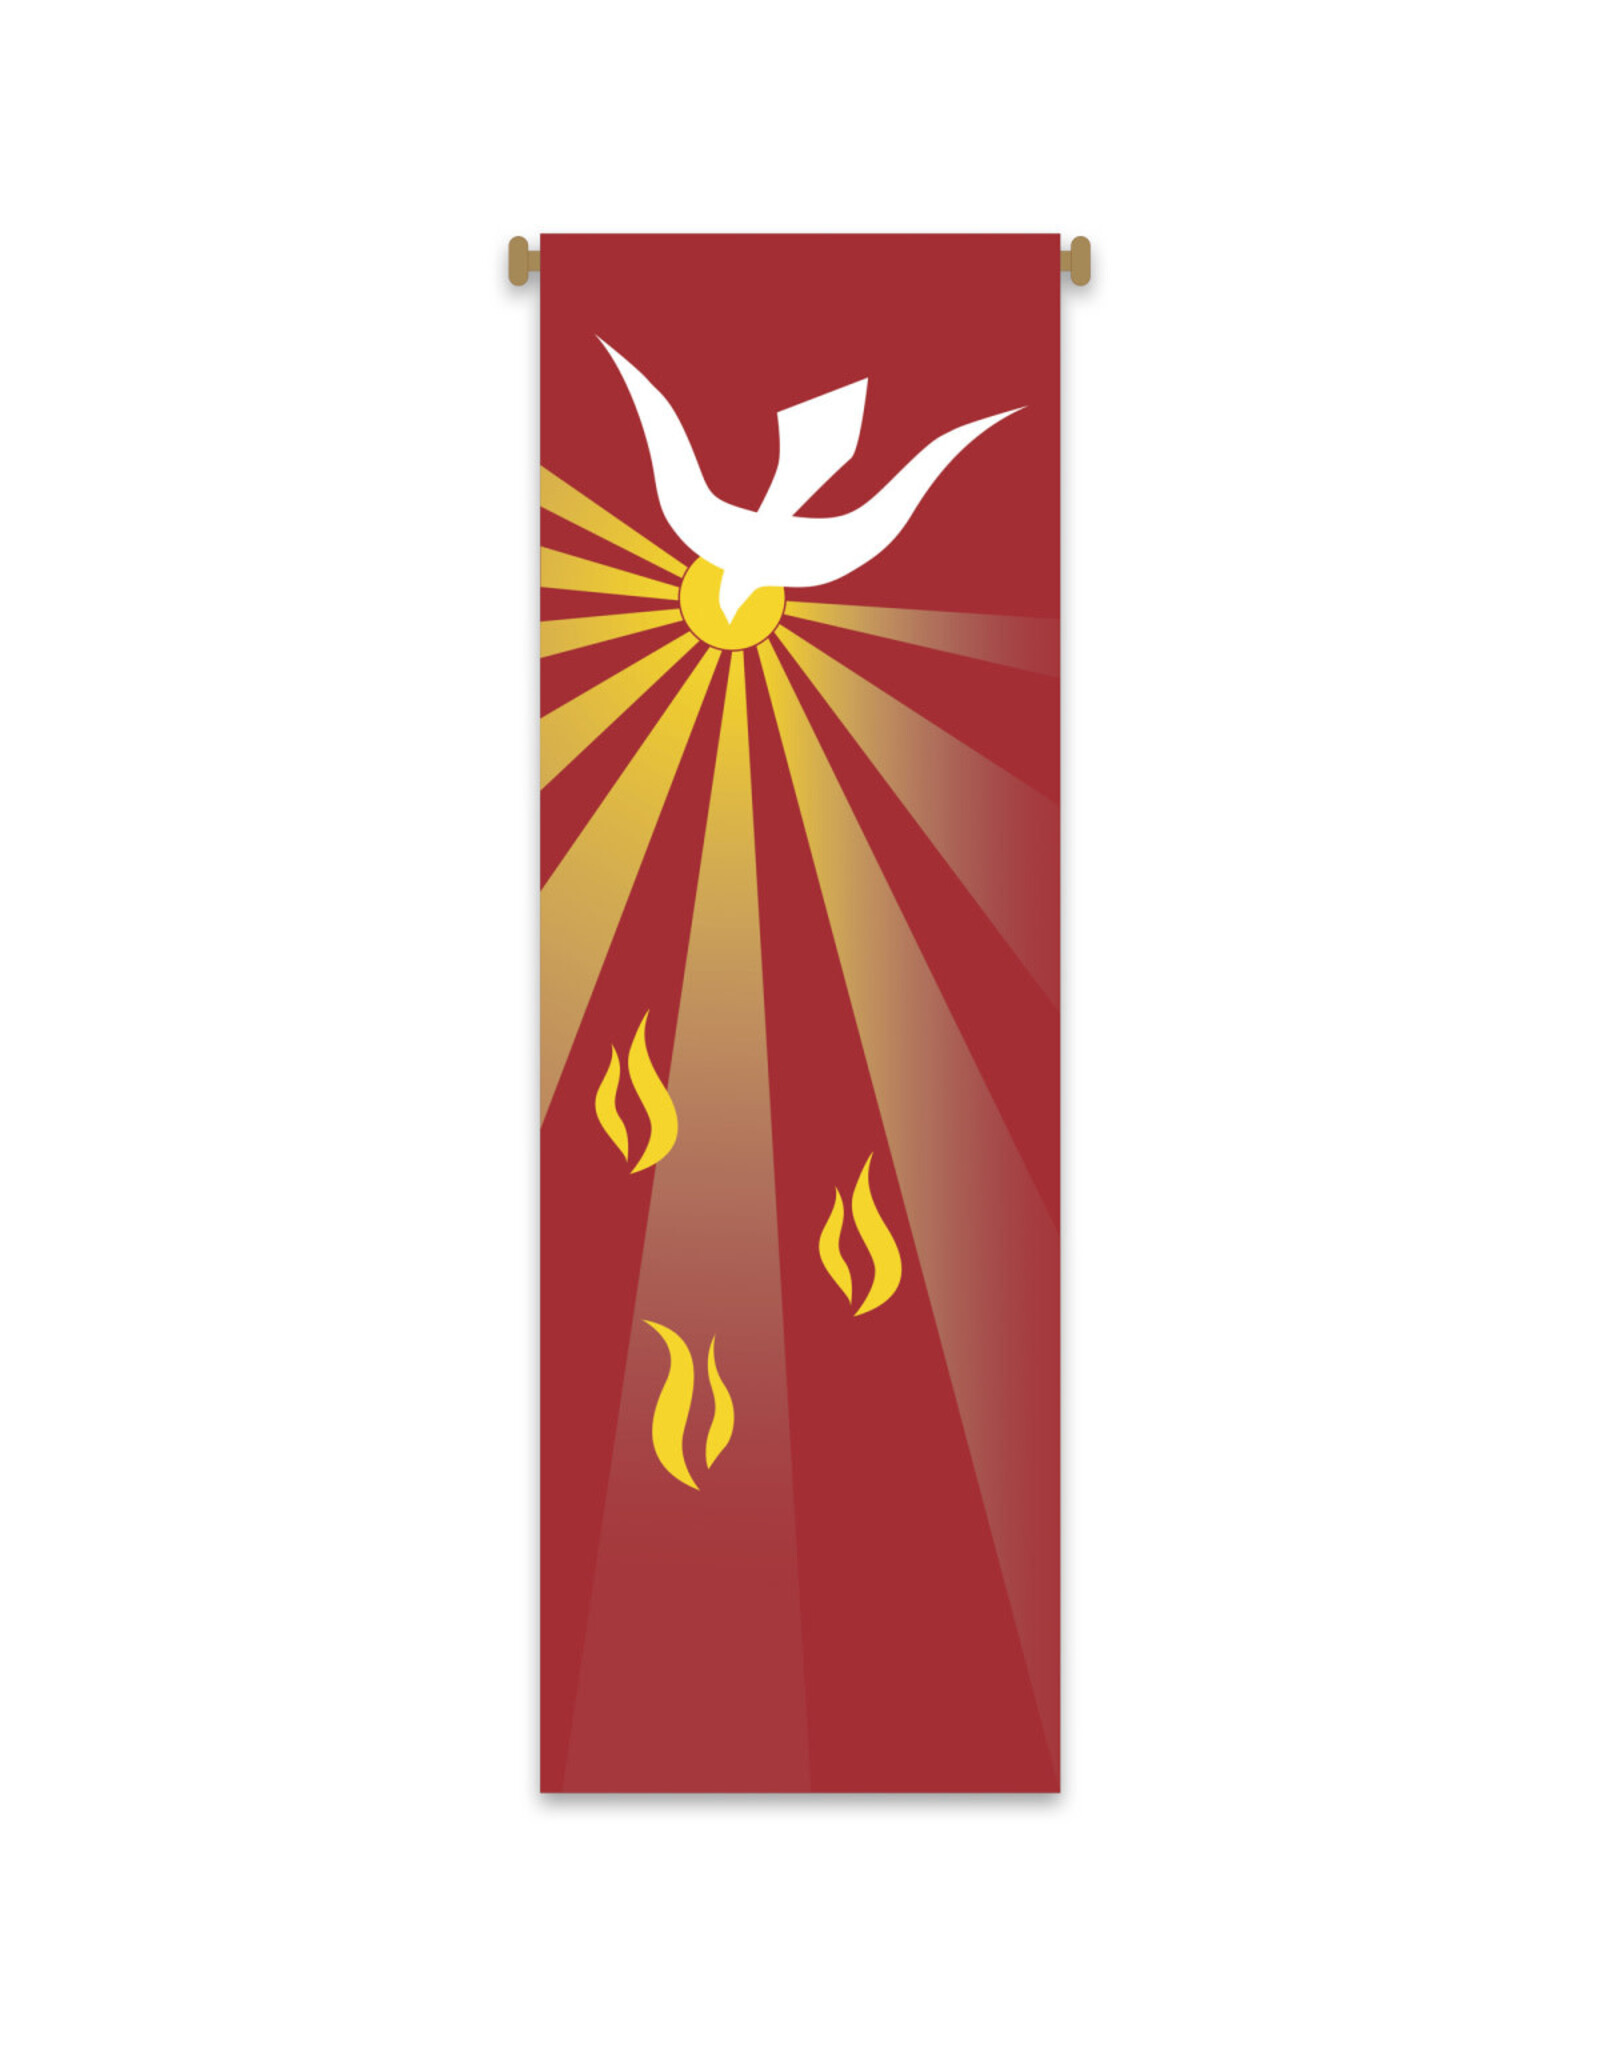 Slabbinck Banner - Red with Holy Spirit Dove & Flames